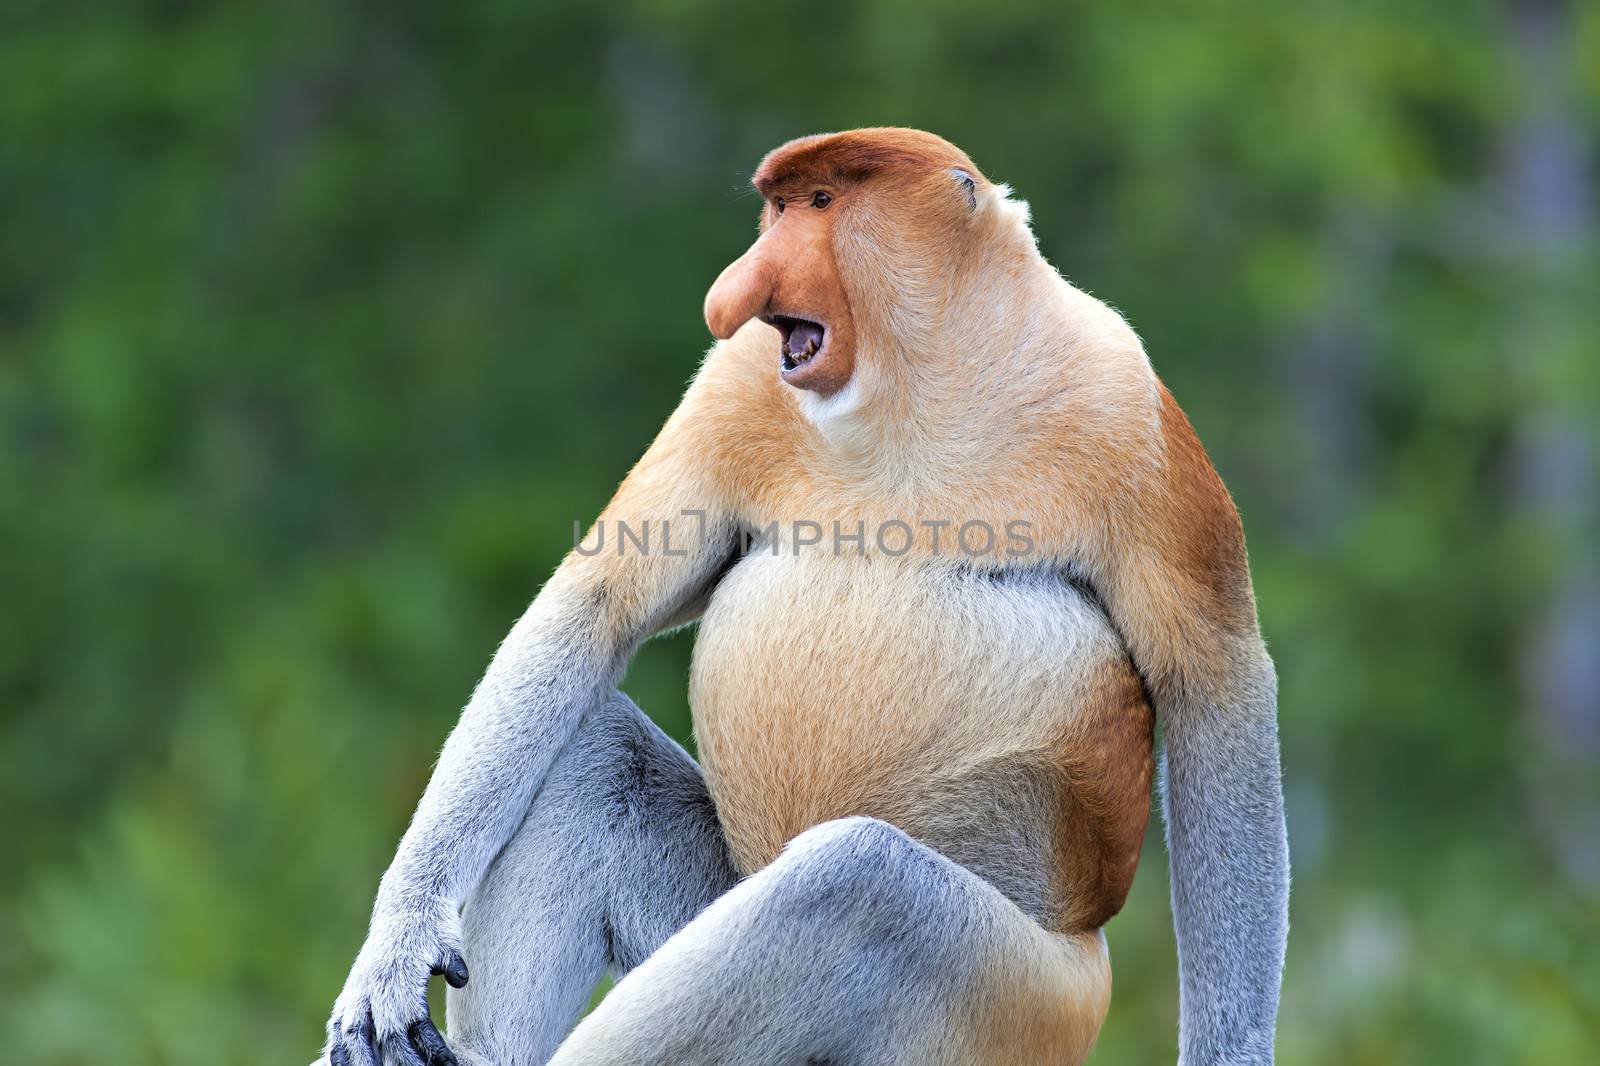 Proboscis monkey by kjorgen